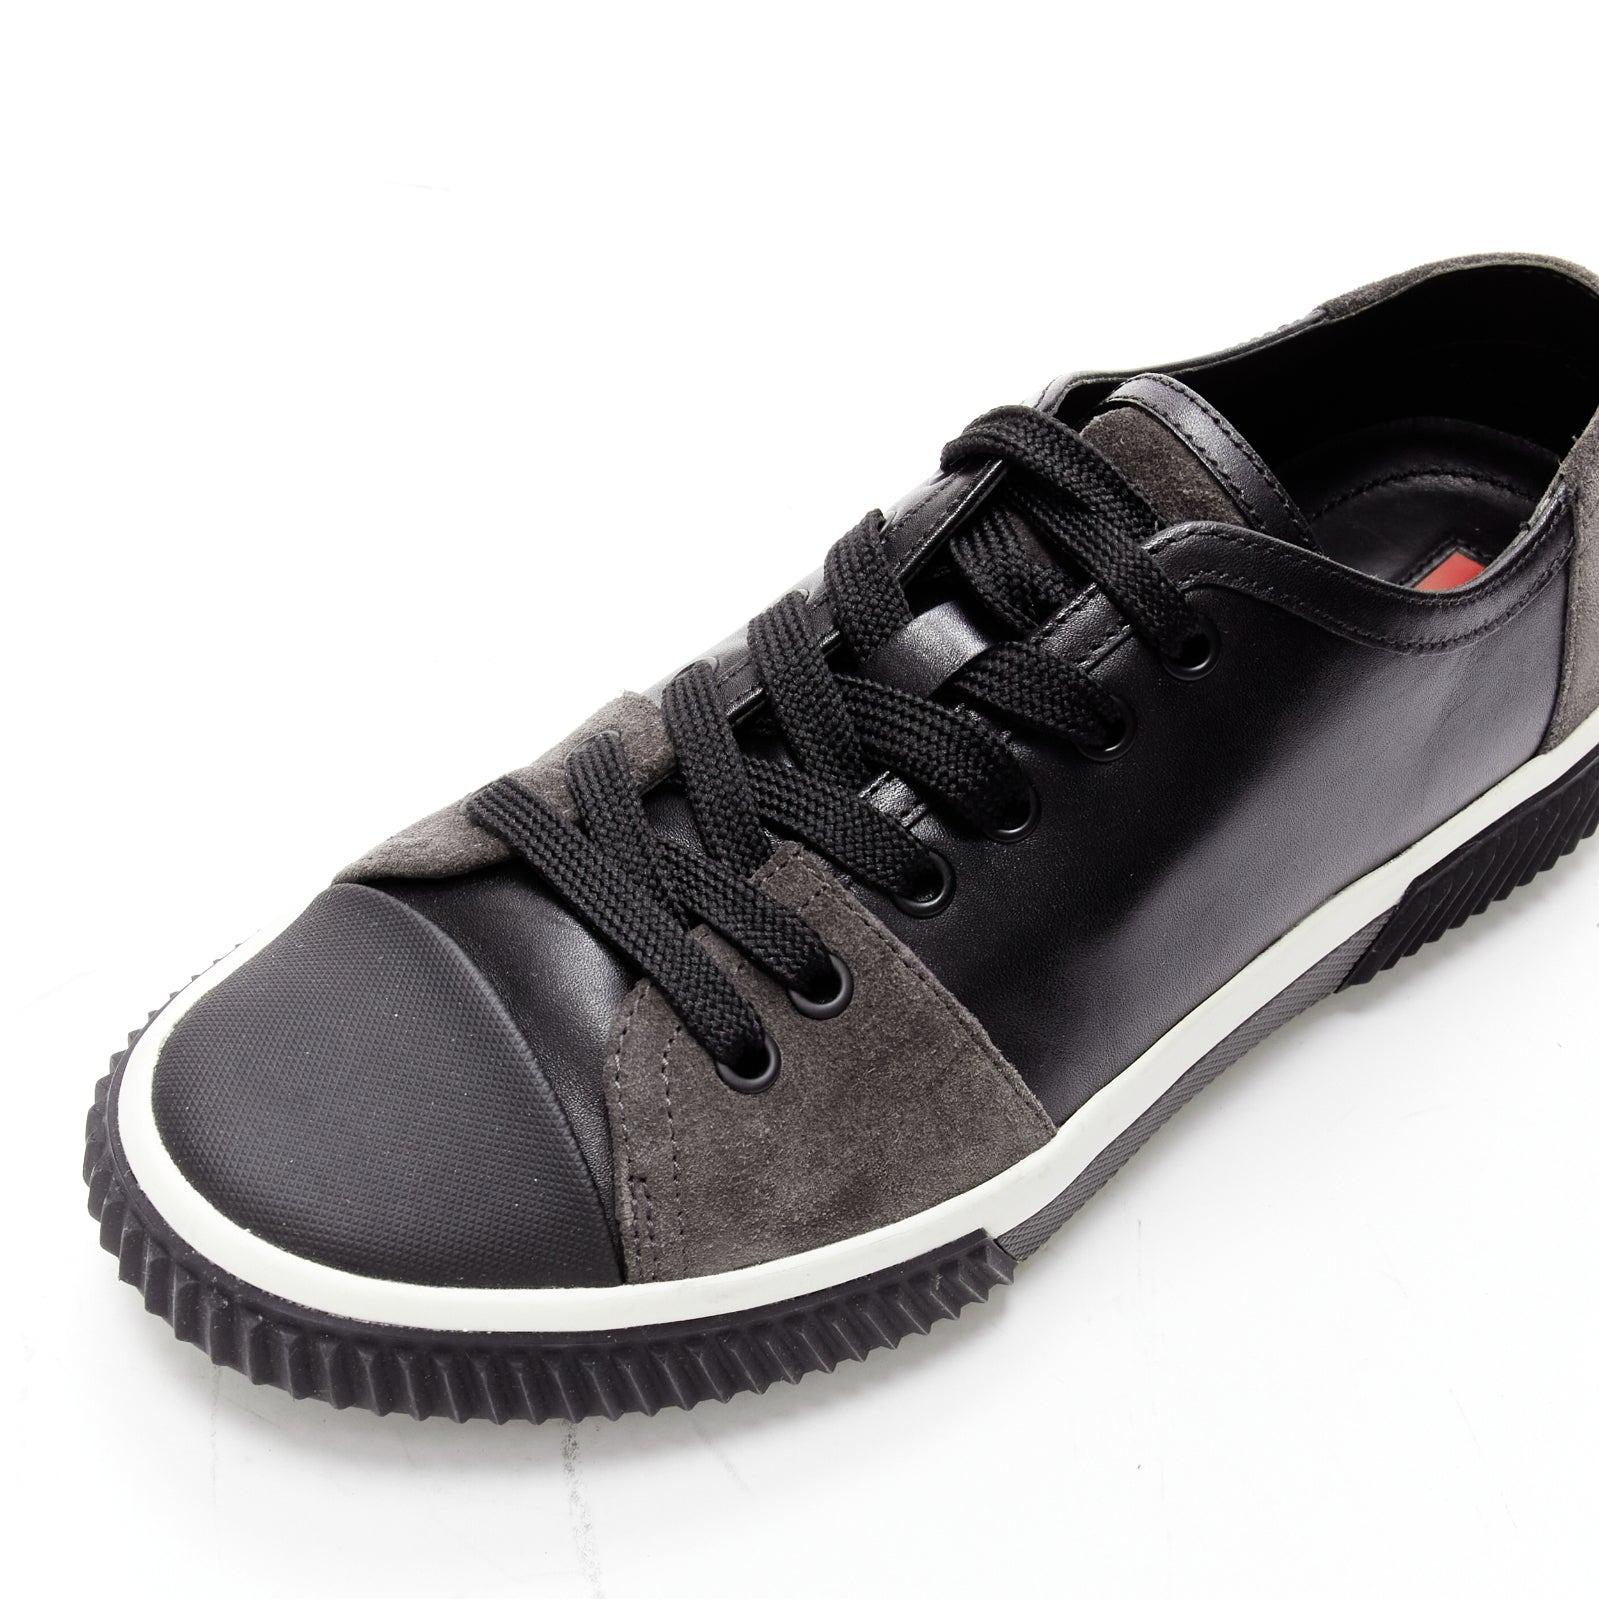 PRADA Stratus black grey suede leather low top sneakers UK5.5 EU39.5 For Sale 2